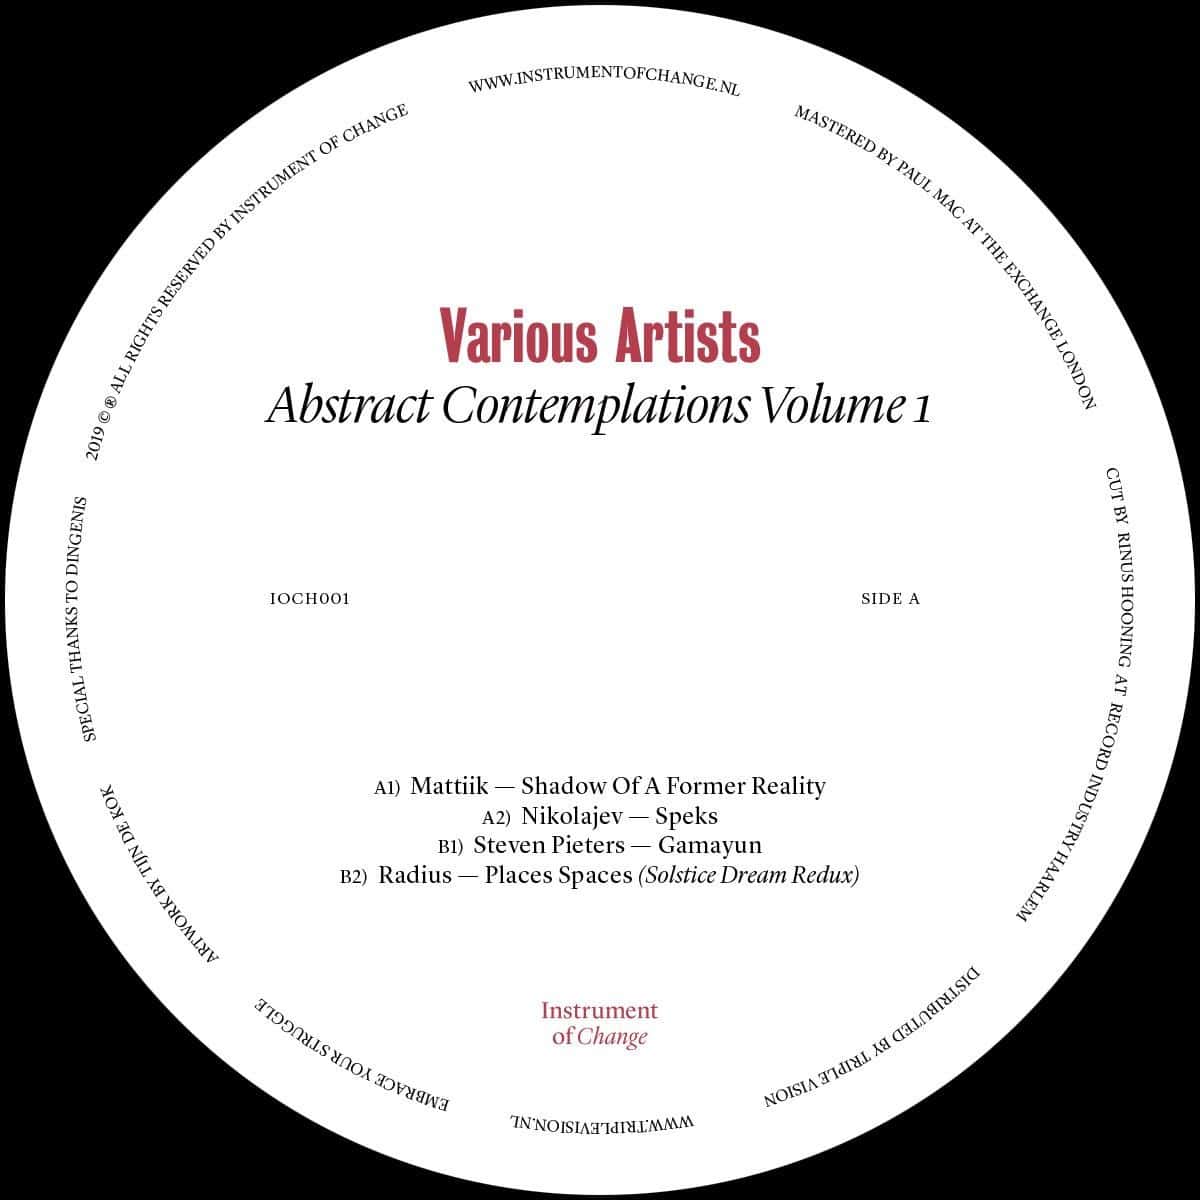 Mattiik/Nikolajev/Steven Pieters/Radius - Abstract Contemplations Volume 1 (printed A3 poster) - IOCH001 - INSTRUMENT OF CHANGE